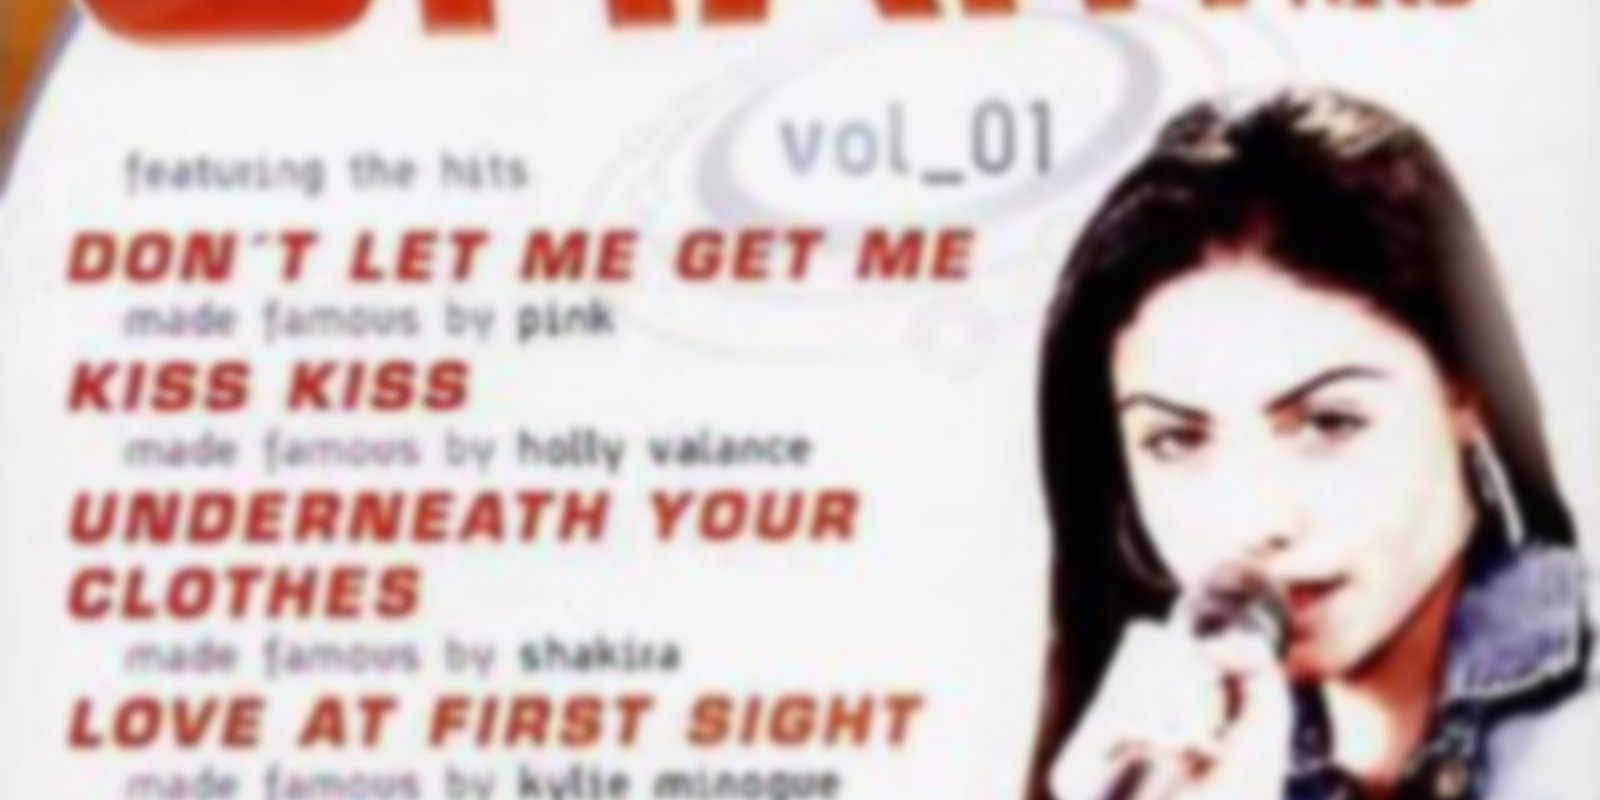 Karaoke - Chart Hits - Volume 1